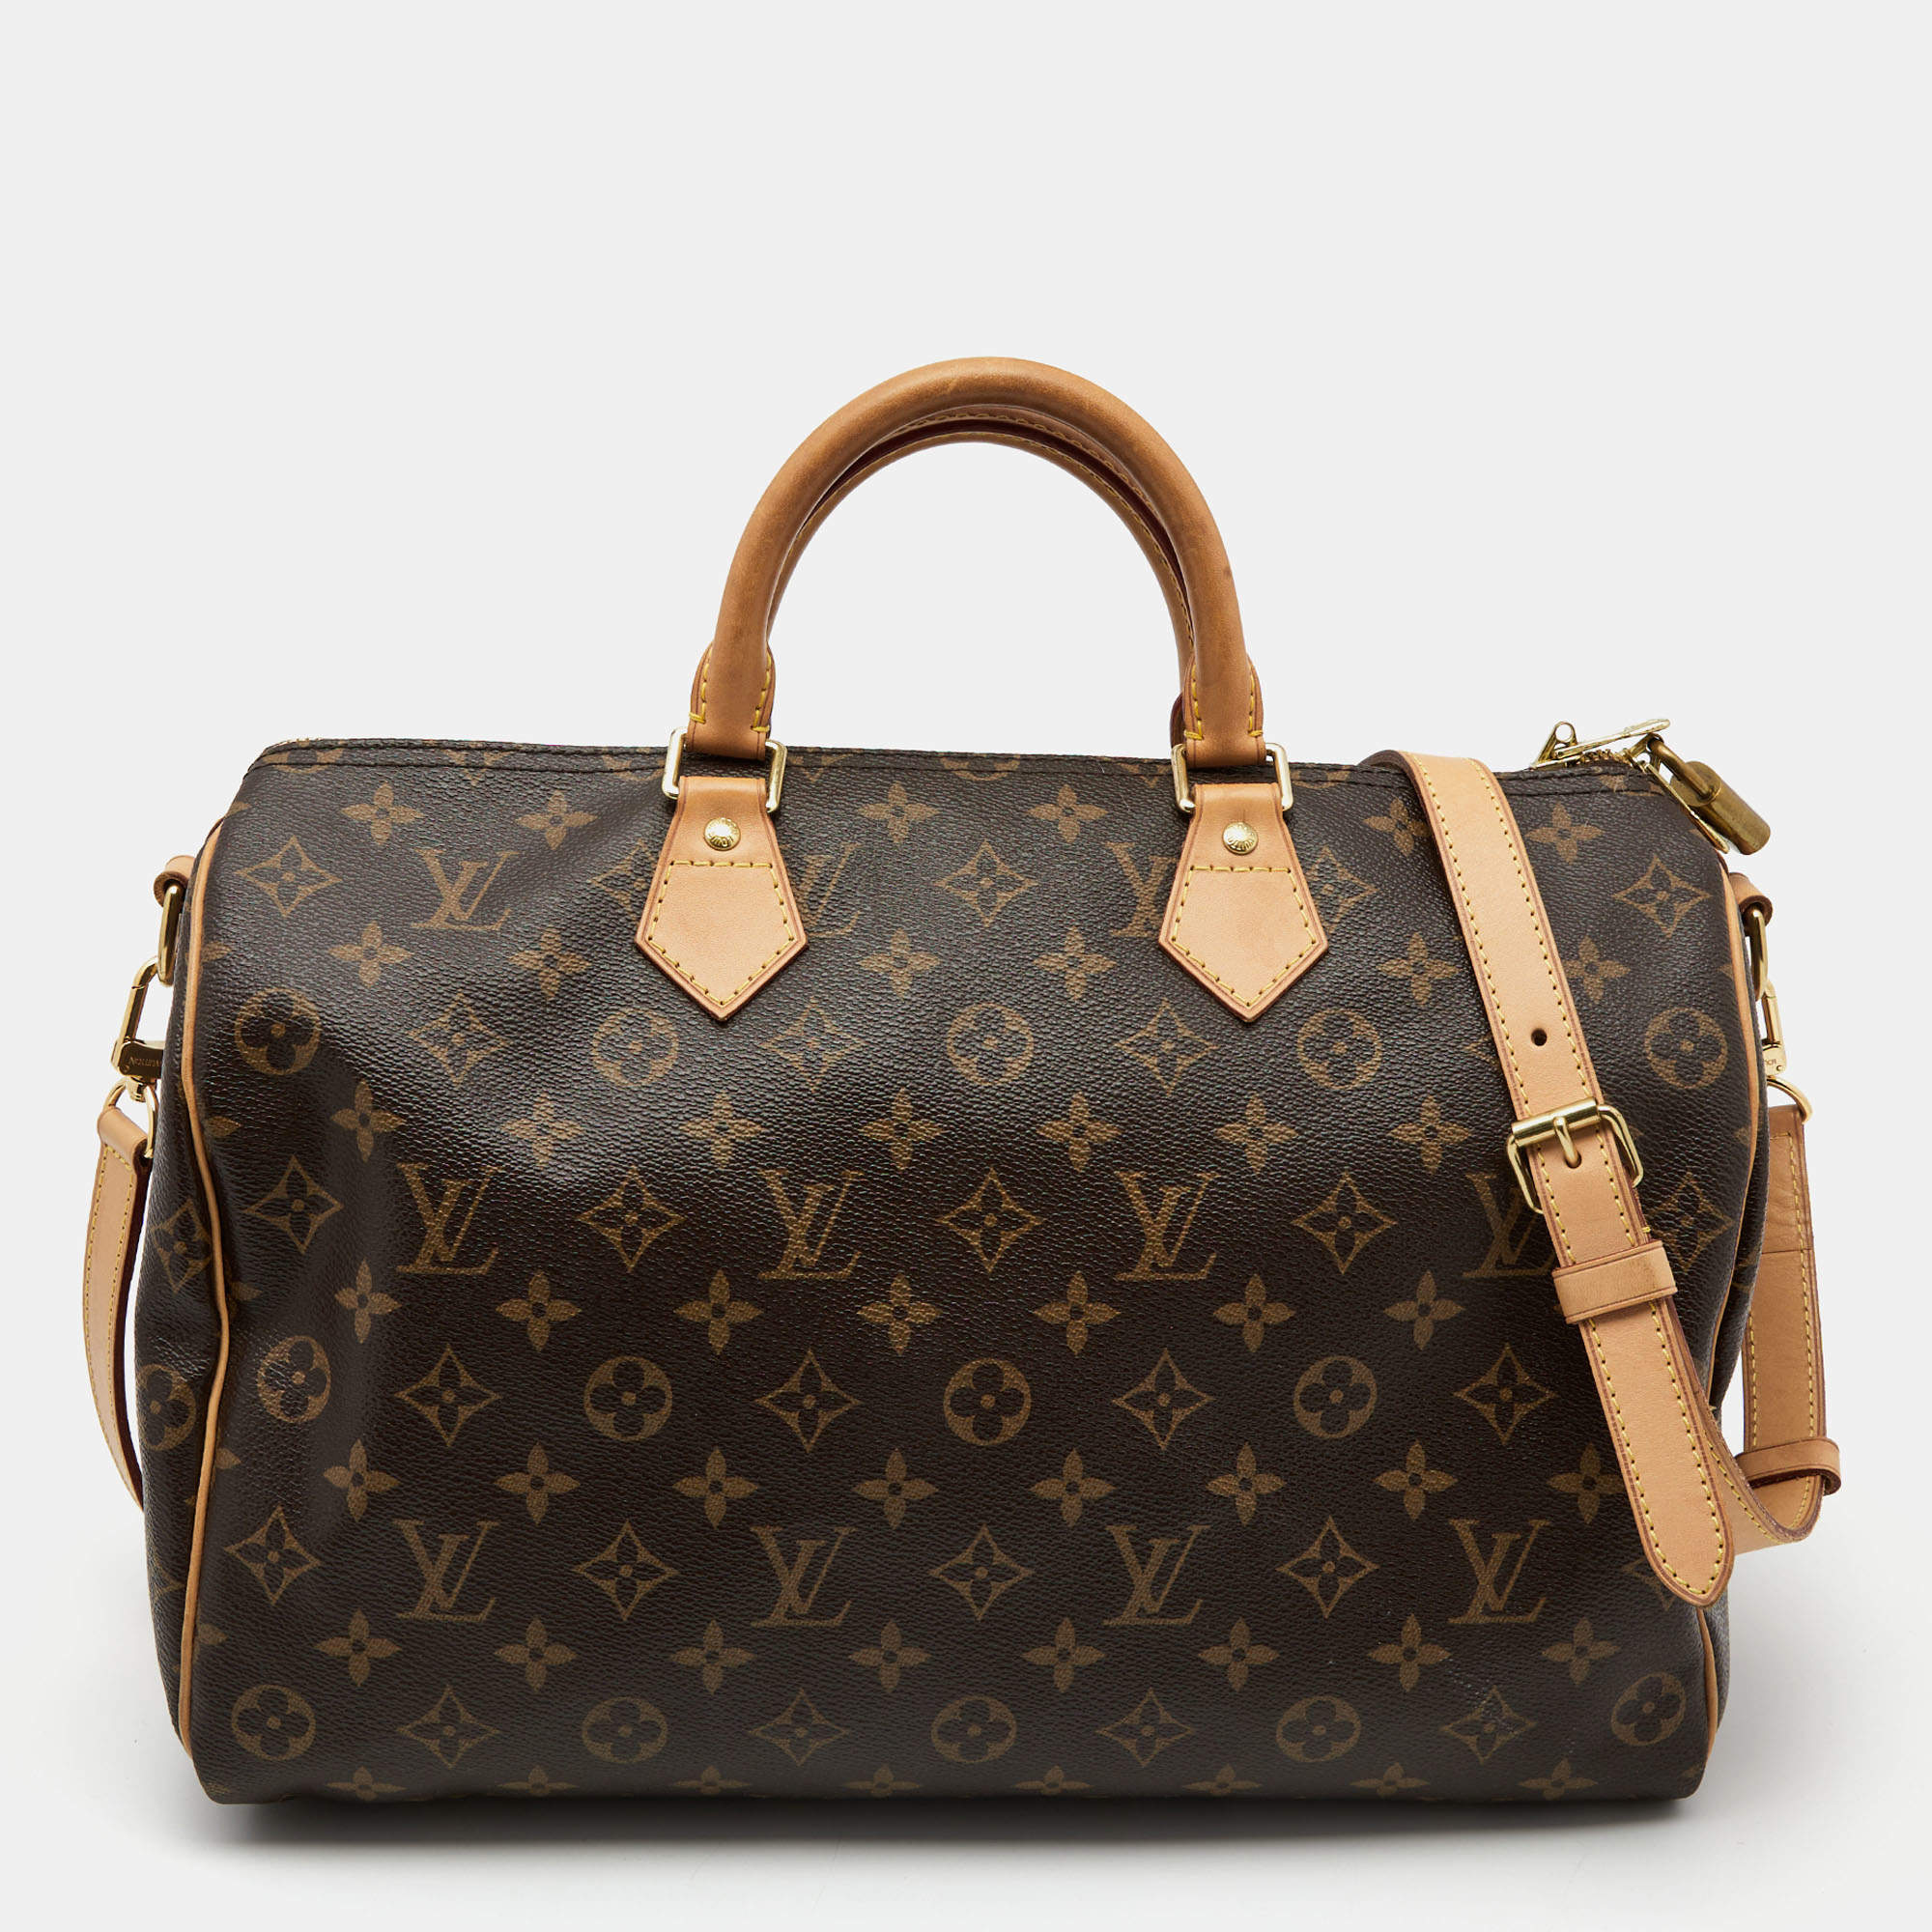 Louis Vuitton, Bags, Nwt Louis Vuitton Speedy 35 Bandouliere